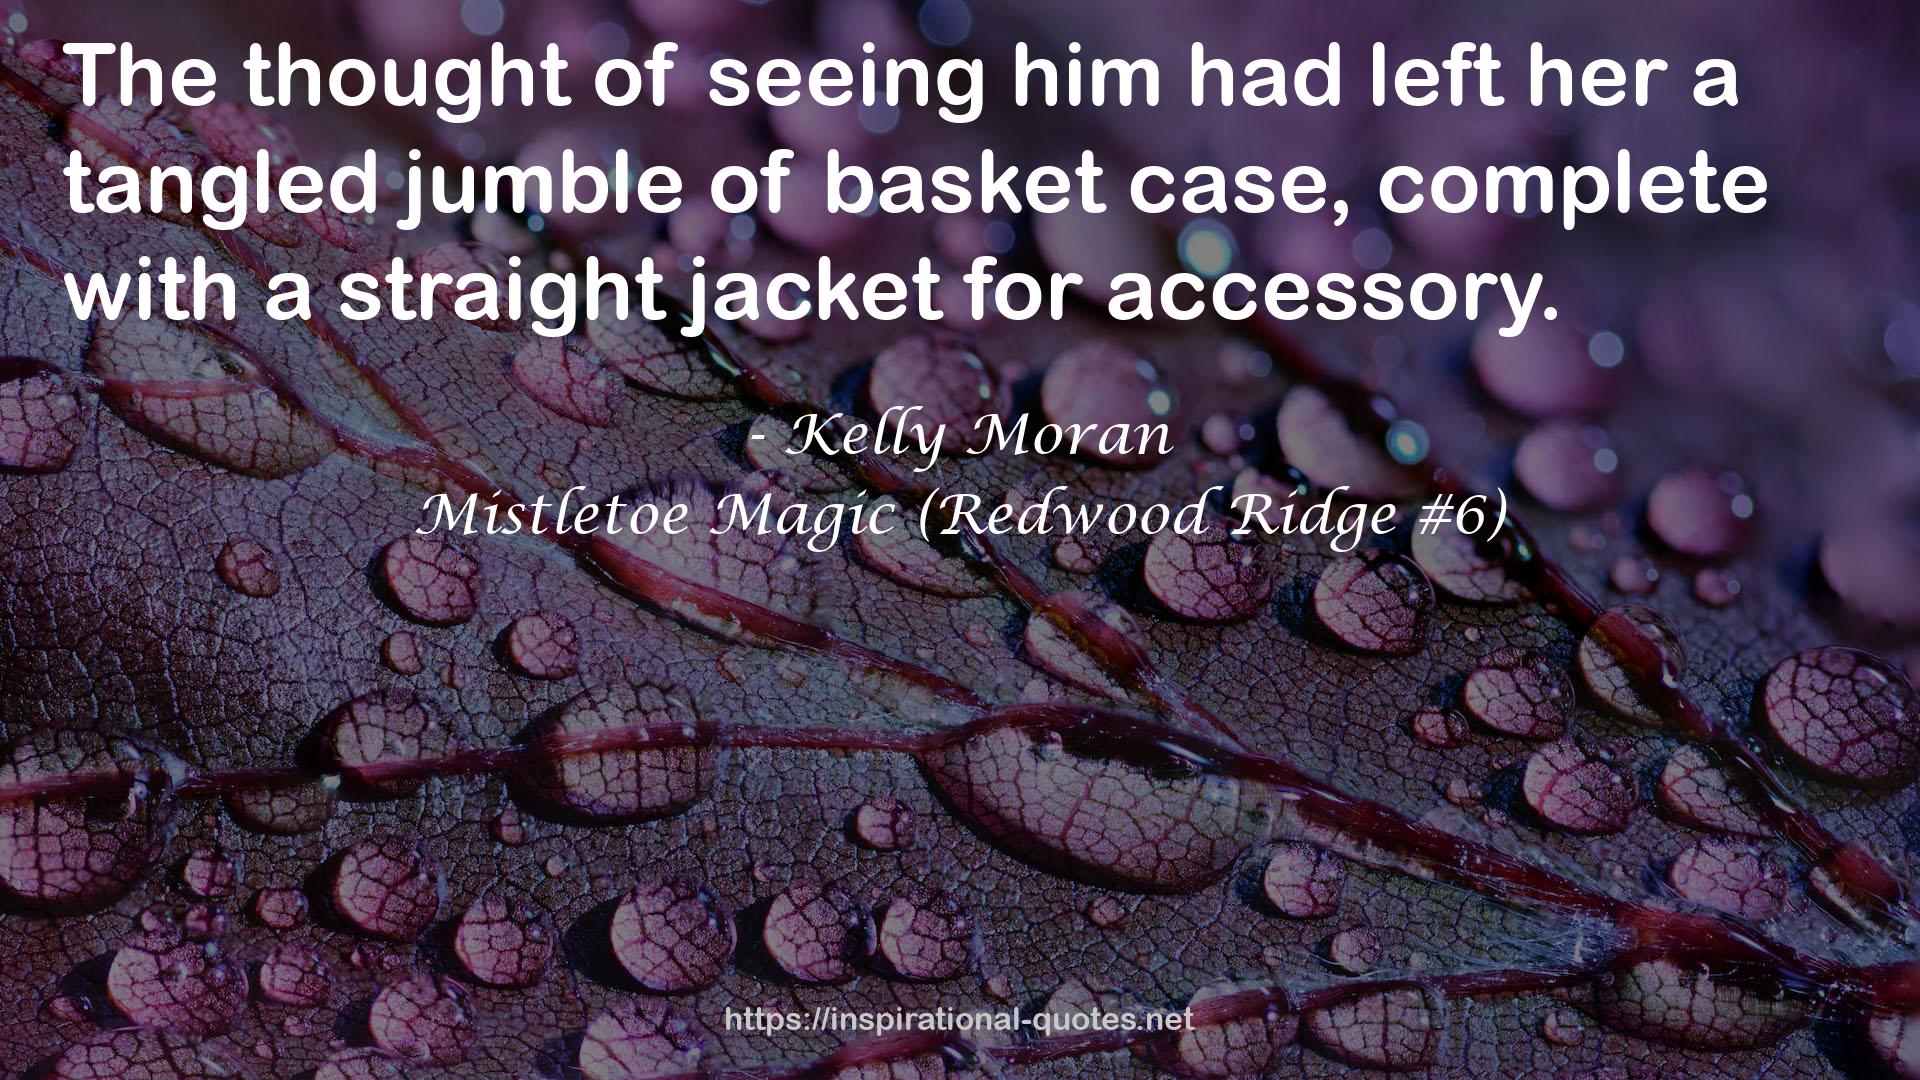 Mistletoe Magic (Redwood Ridge #6) QUOTES